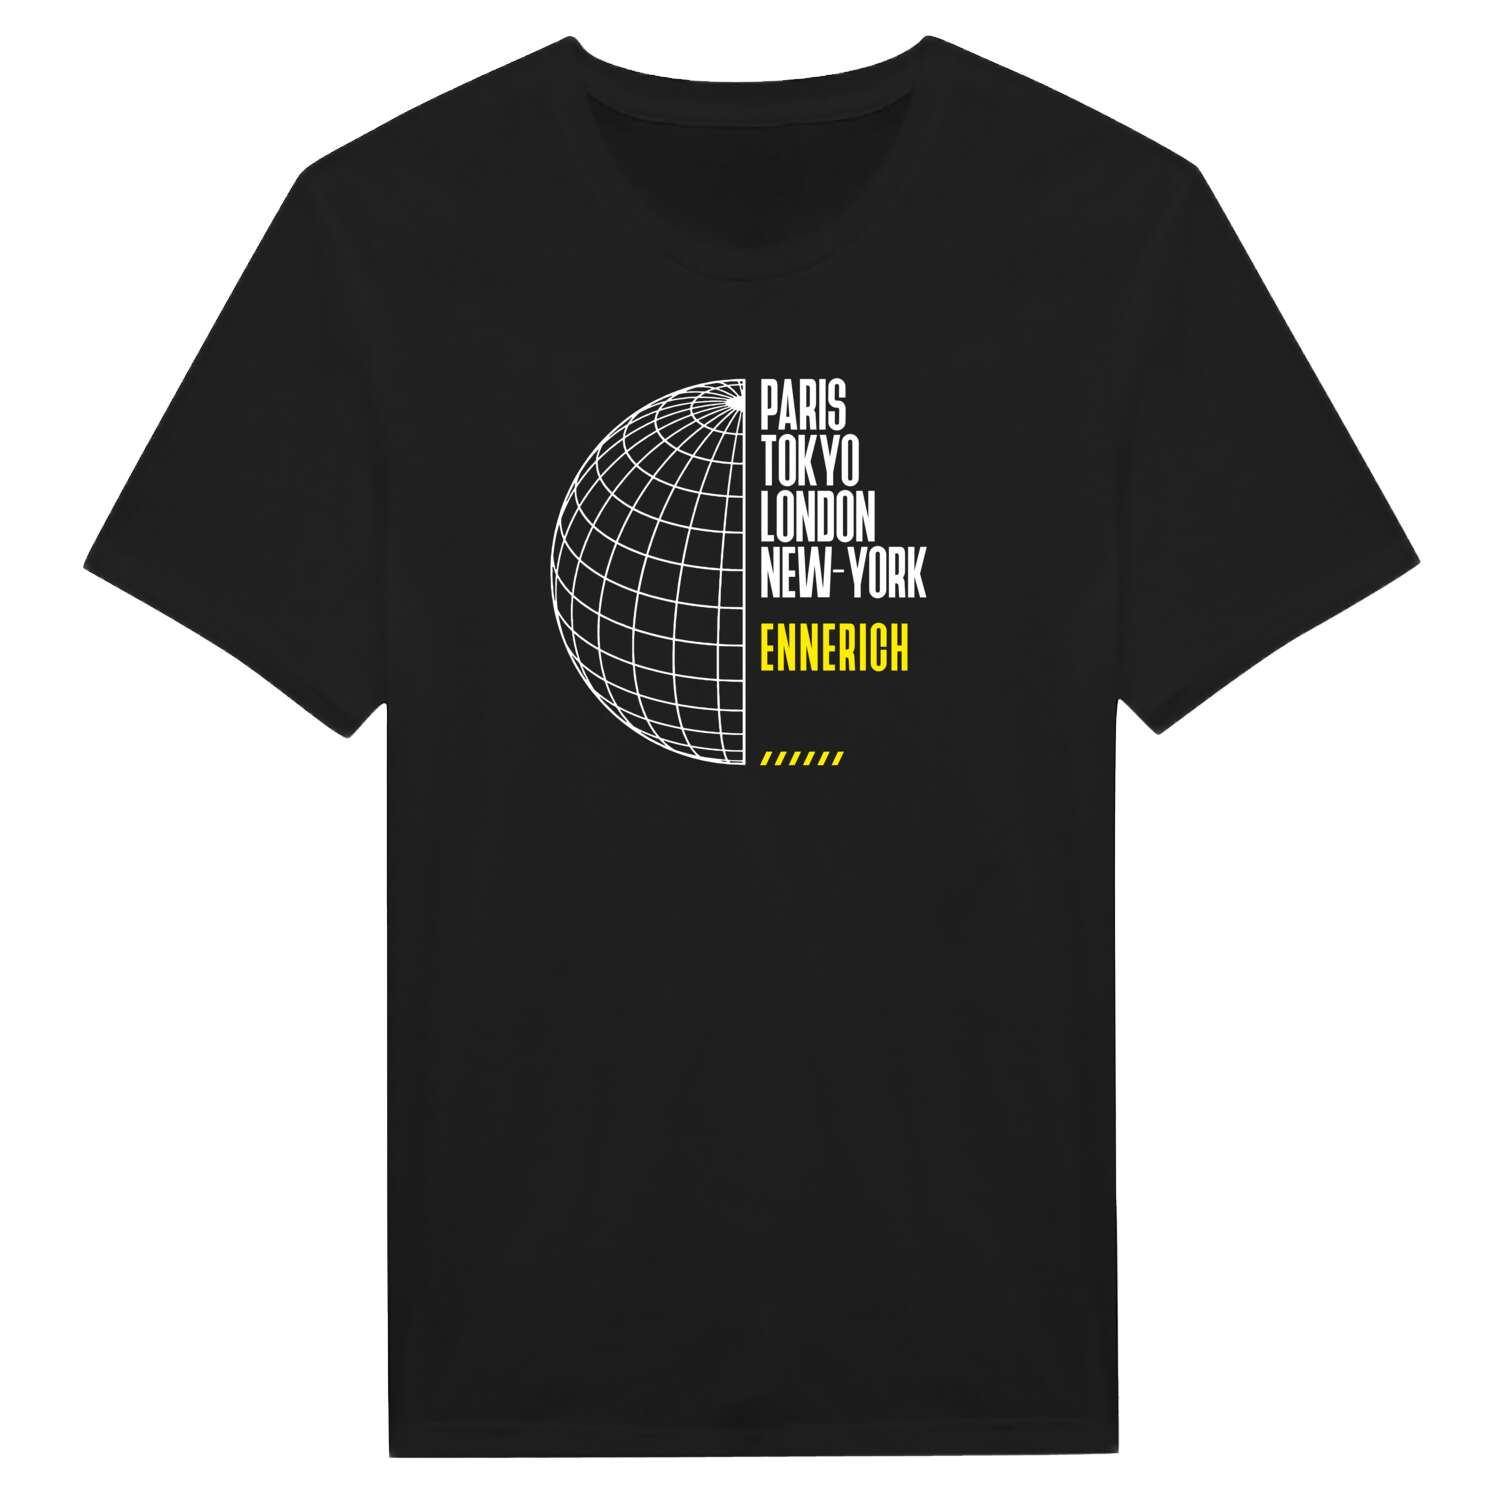 Ennerich T-Shirt »Paris Tokyo London«